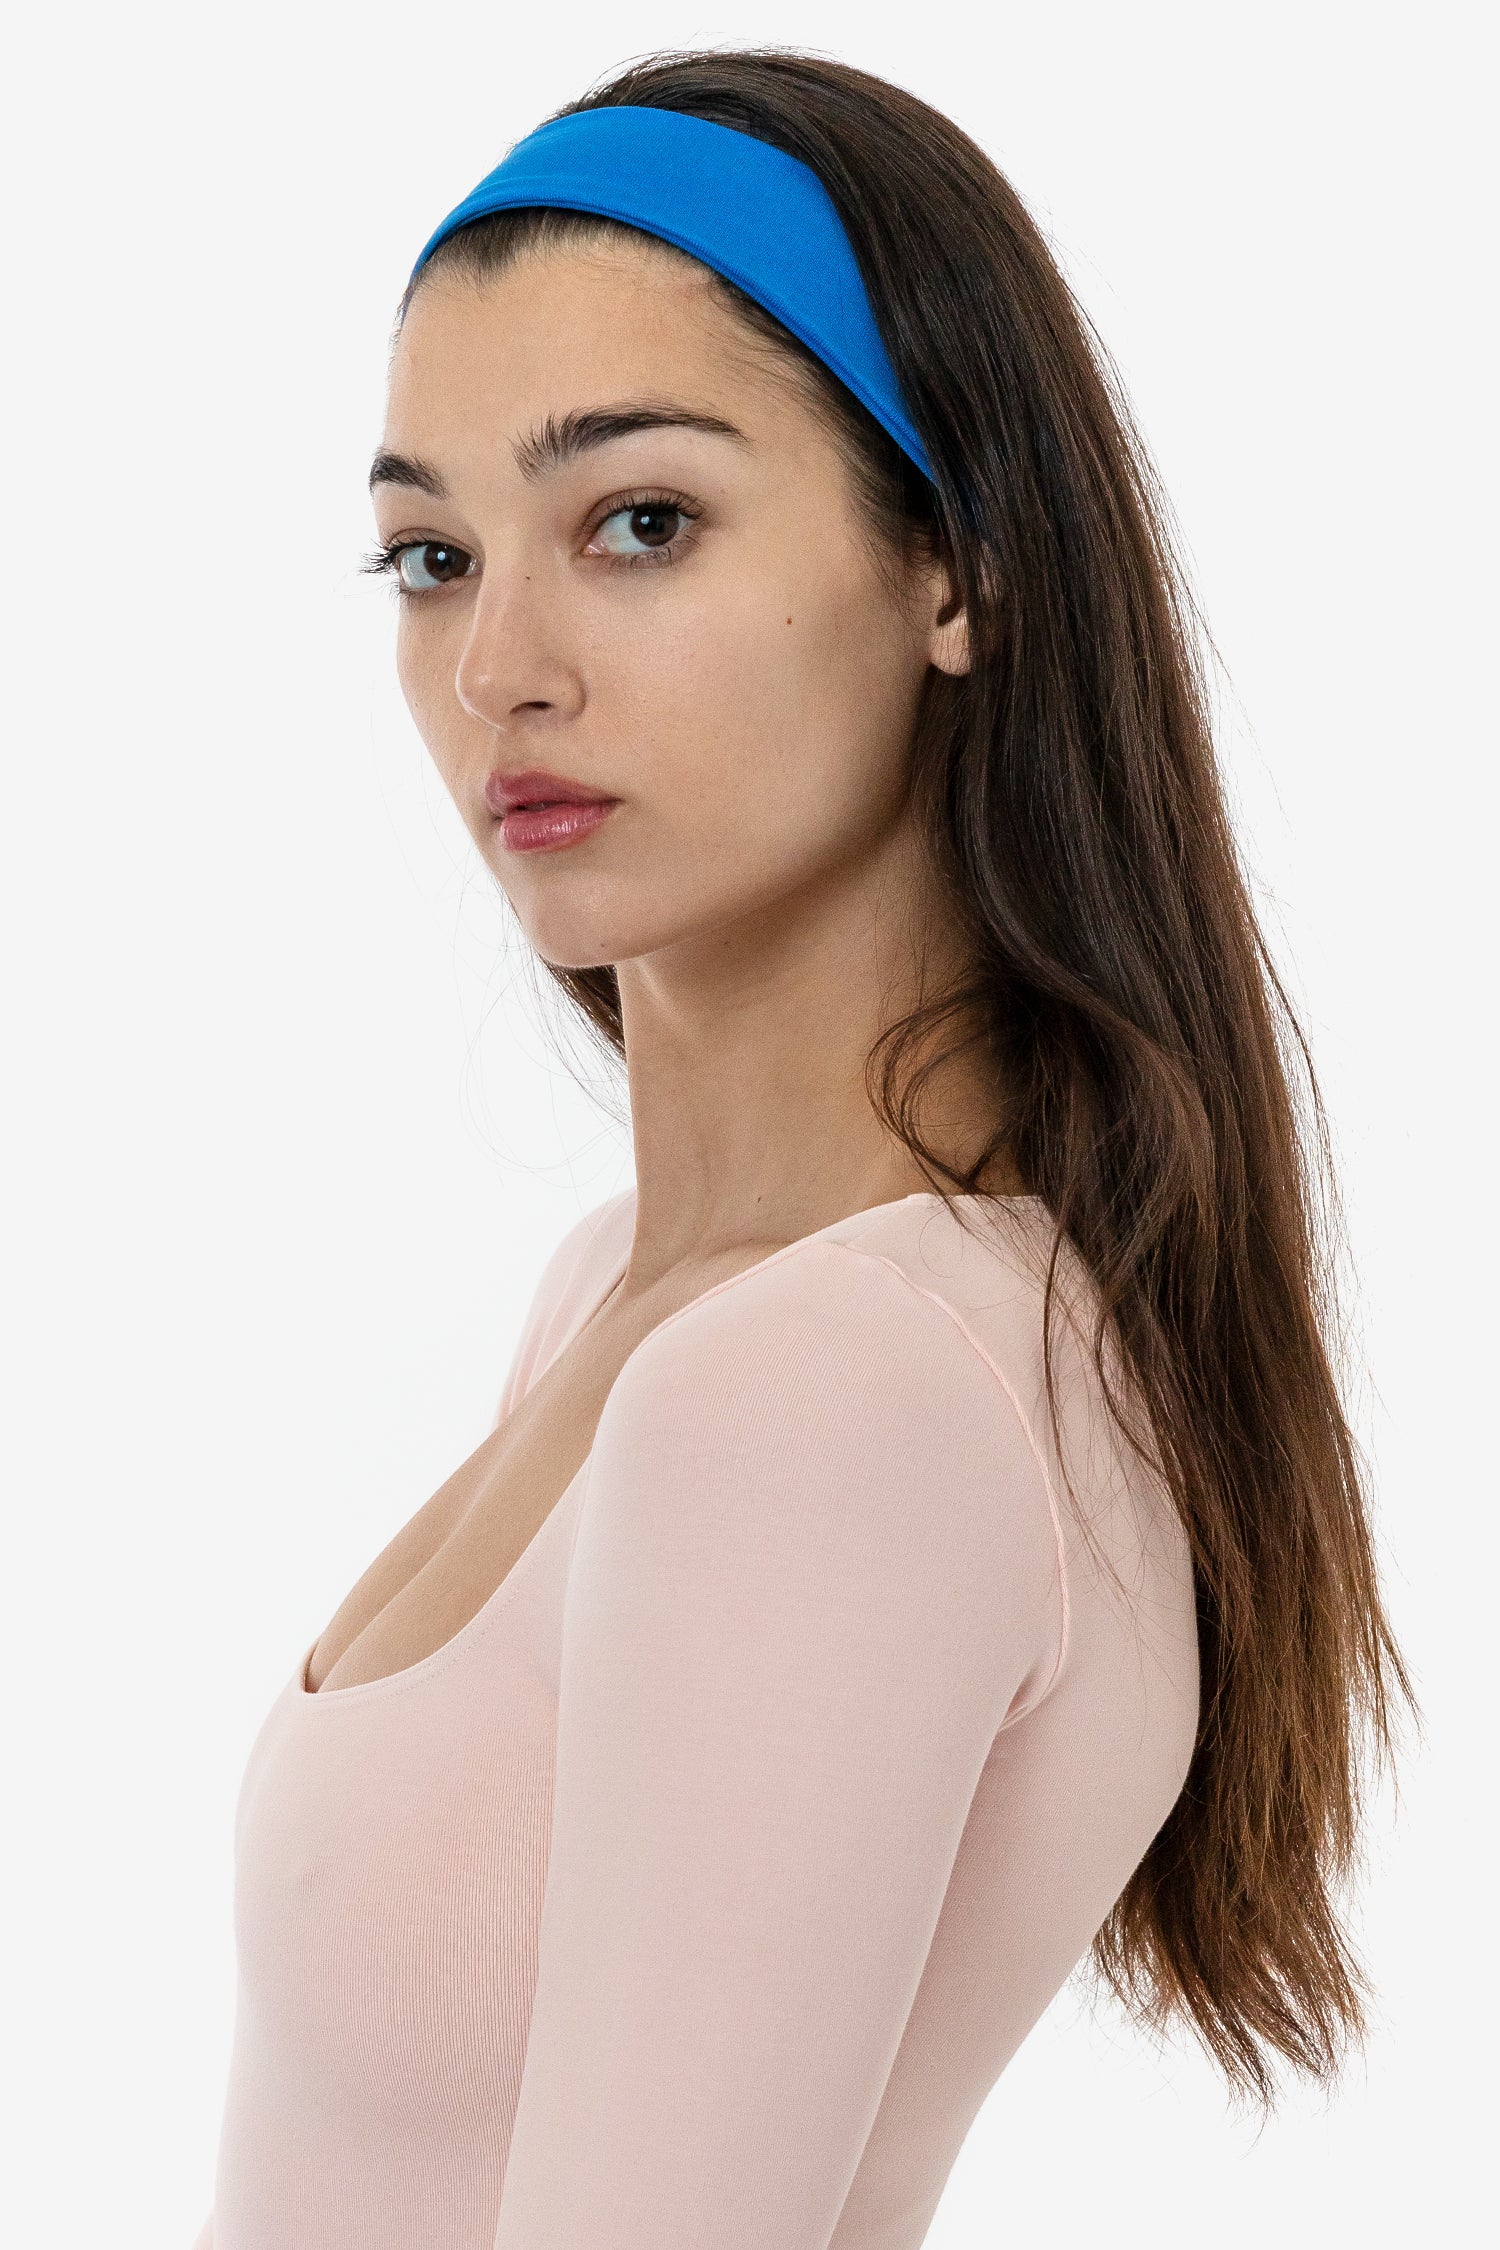 (YHB-003) - Headbands women hair head bands